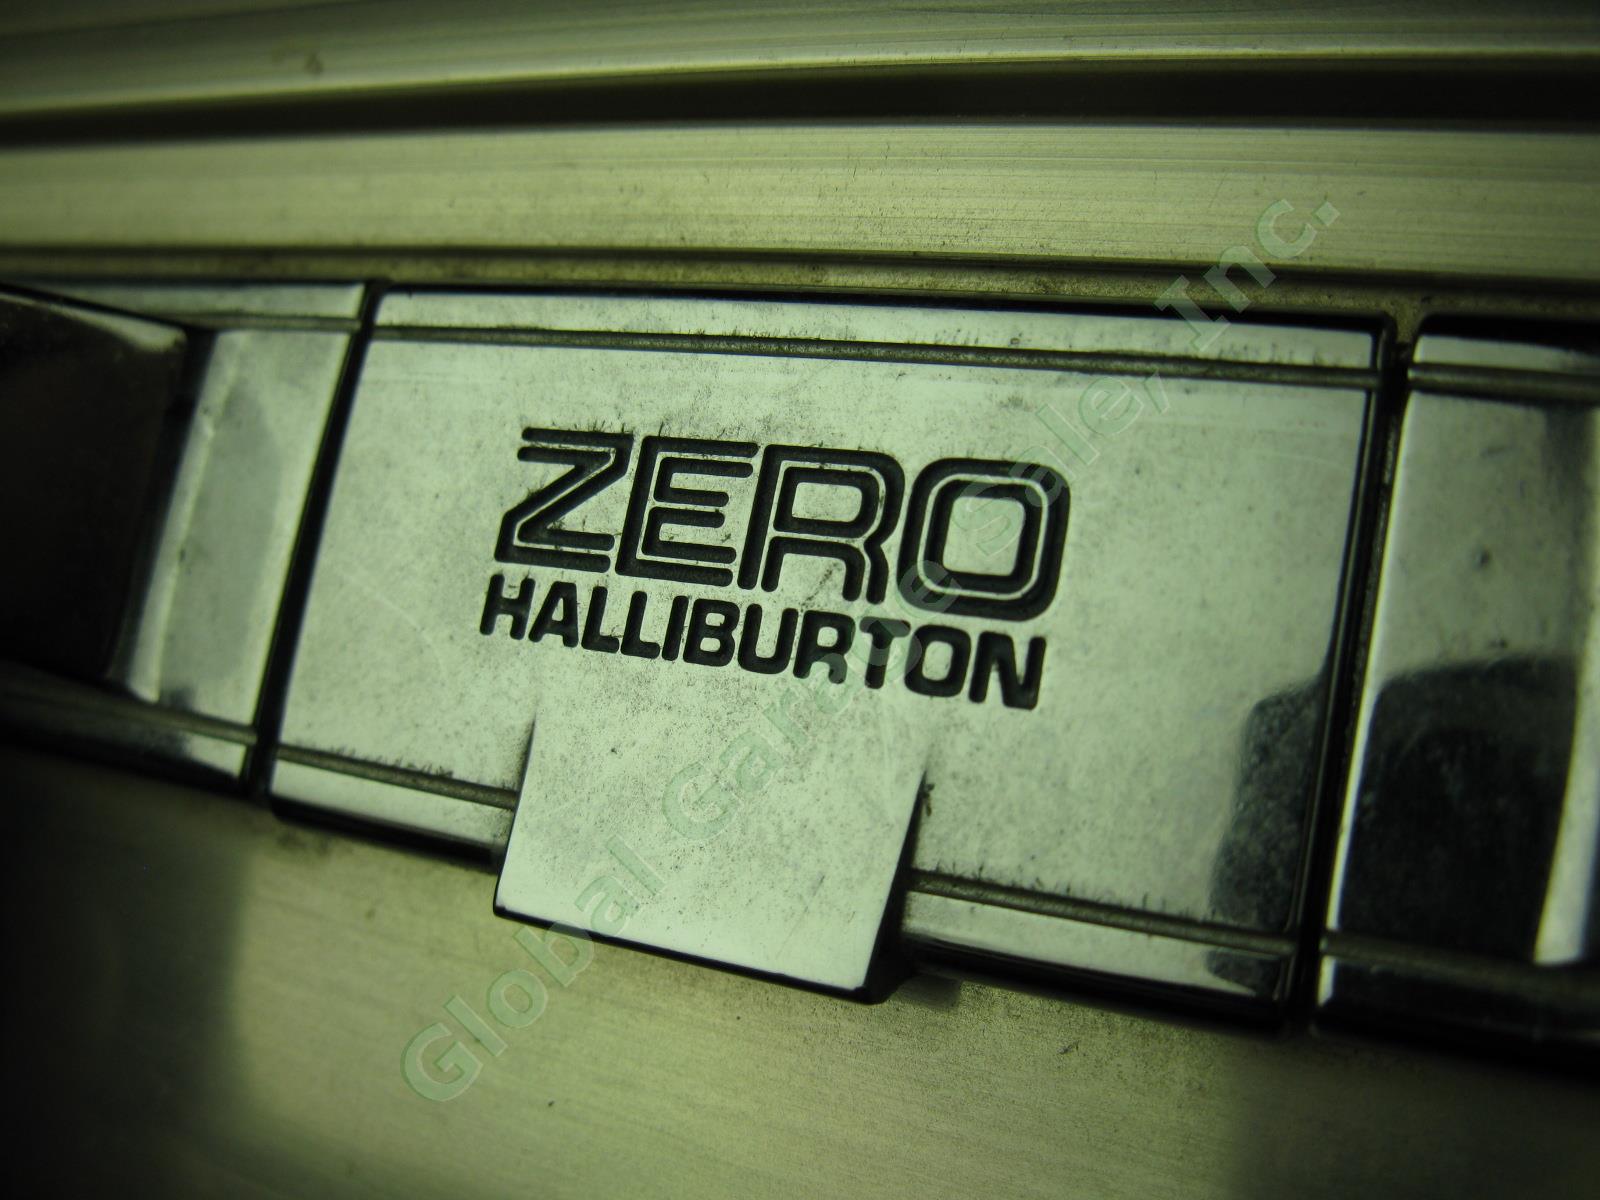 Zero Halliburton Presto Aluminum Combo Lock Briefcase Suitcase Luggage 21x13x8 1